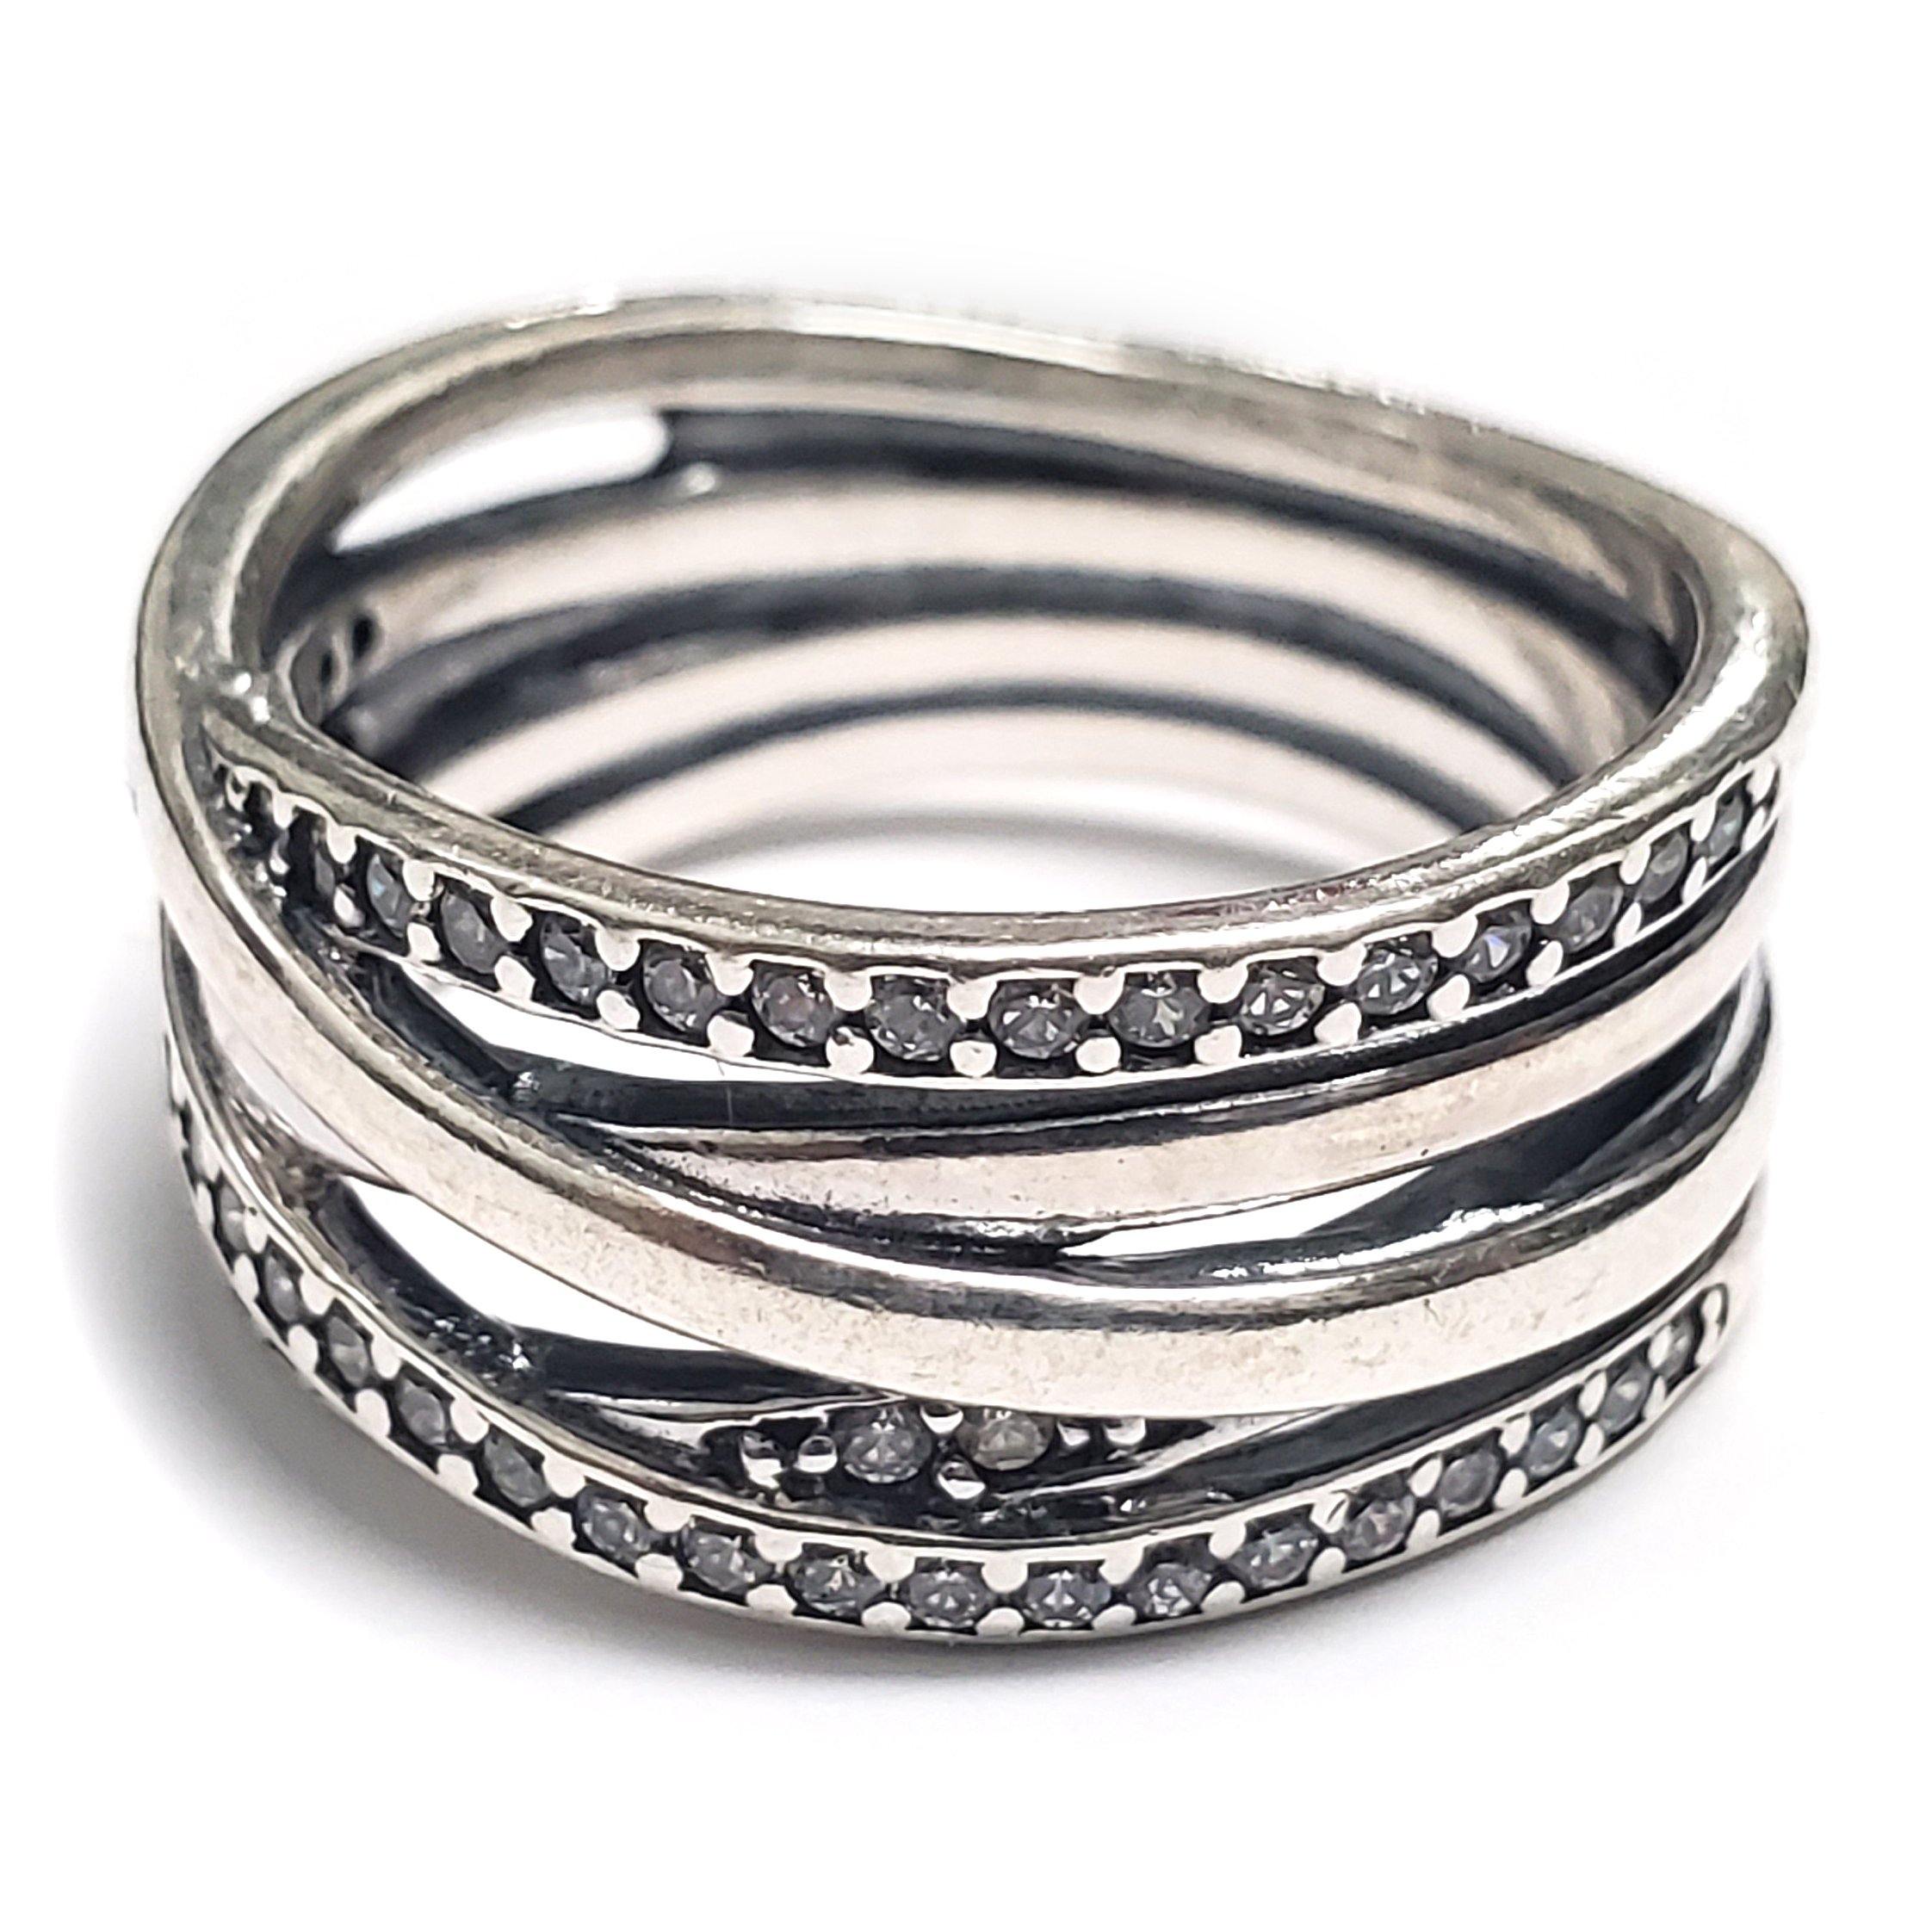 Inpakken 945 Leesbaarheid Pandora Sparkling & Polished Lines Ring Size 8 - $150.00 at El Palacio  Jewelry Shop